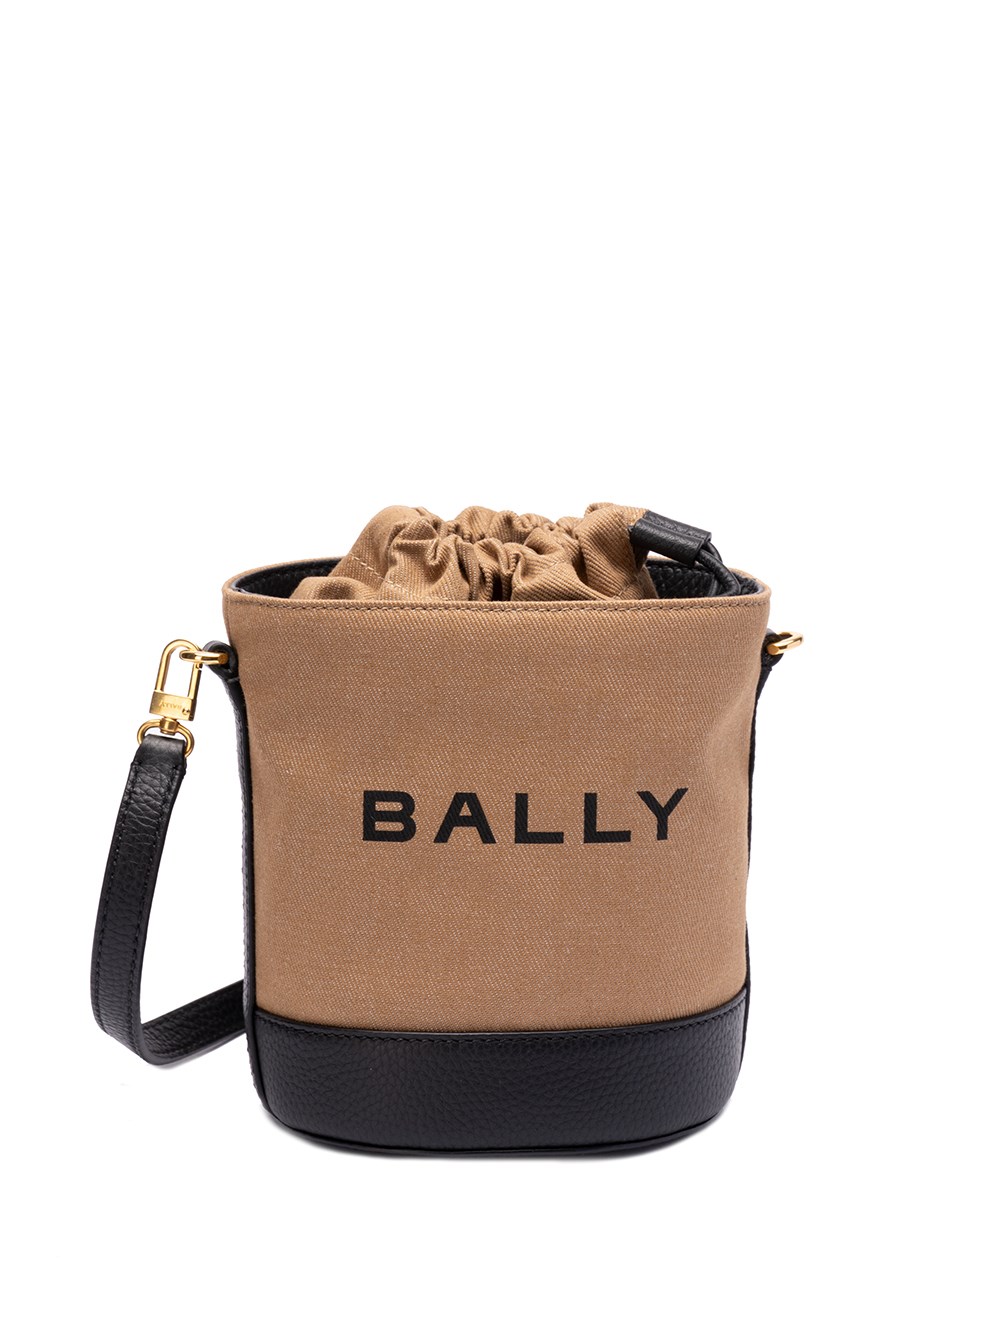 Bally Bar Bucket Bag In Beige